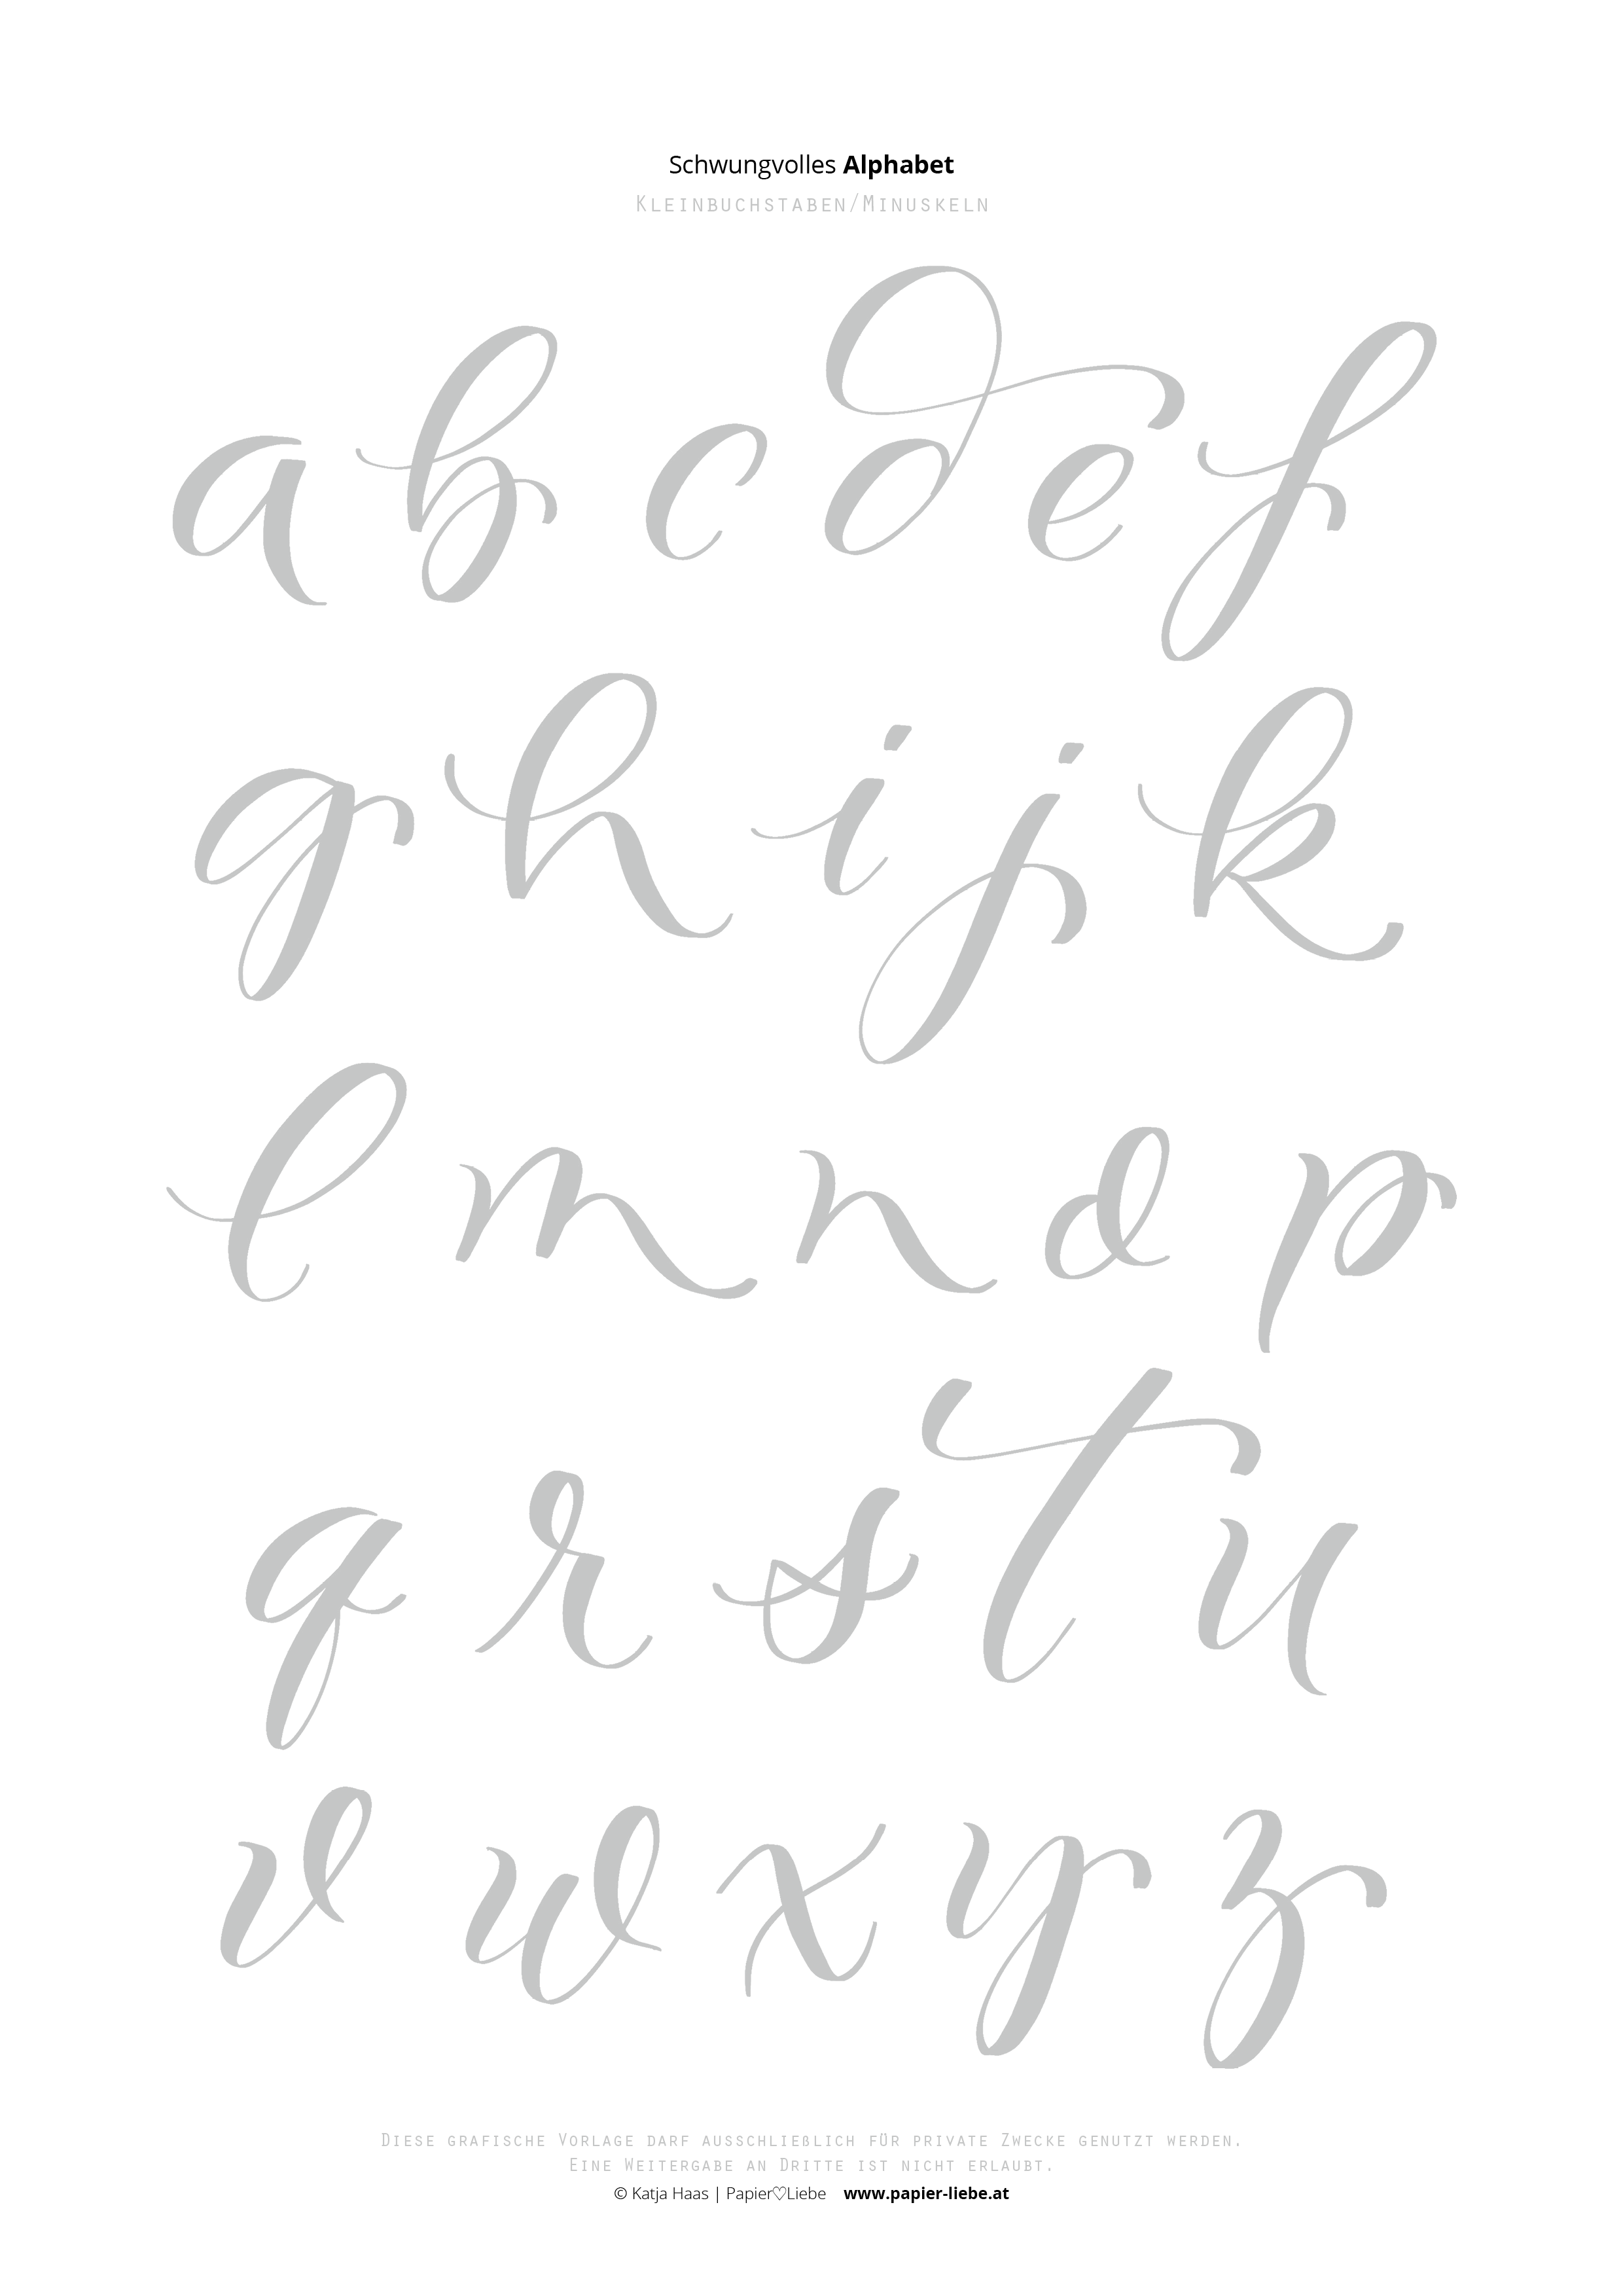 brush-lettering-schwungvolles-alphabet-kleinbuchstaben - Katja Haas